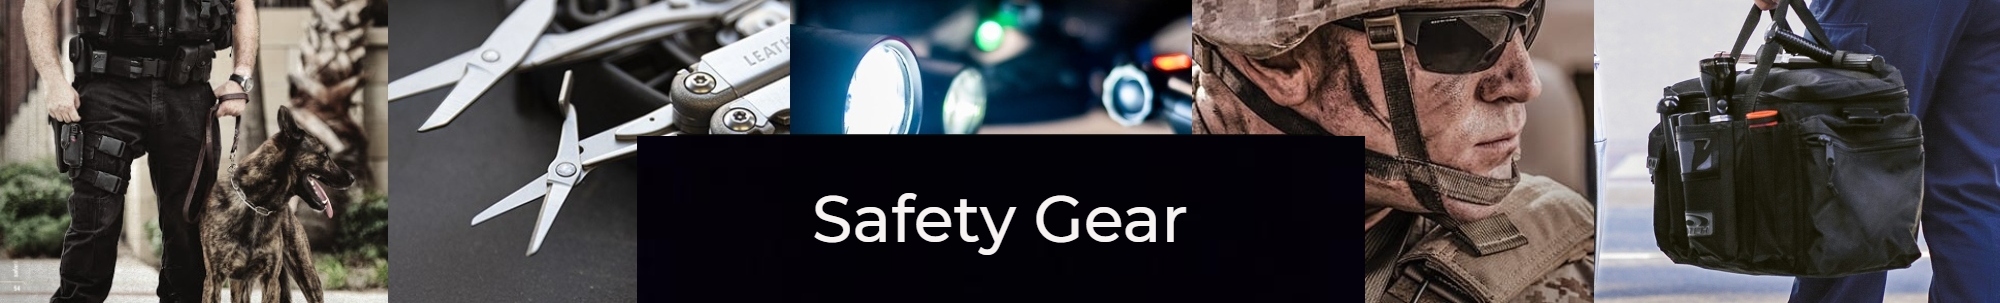 Equipment-safety.jpg